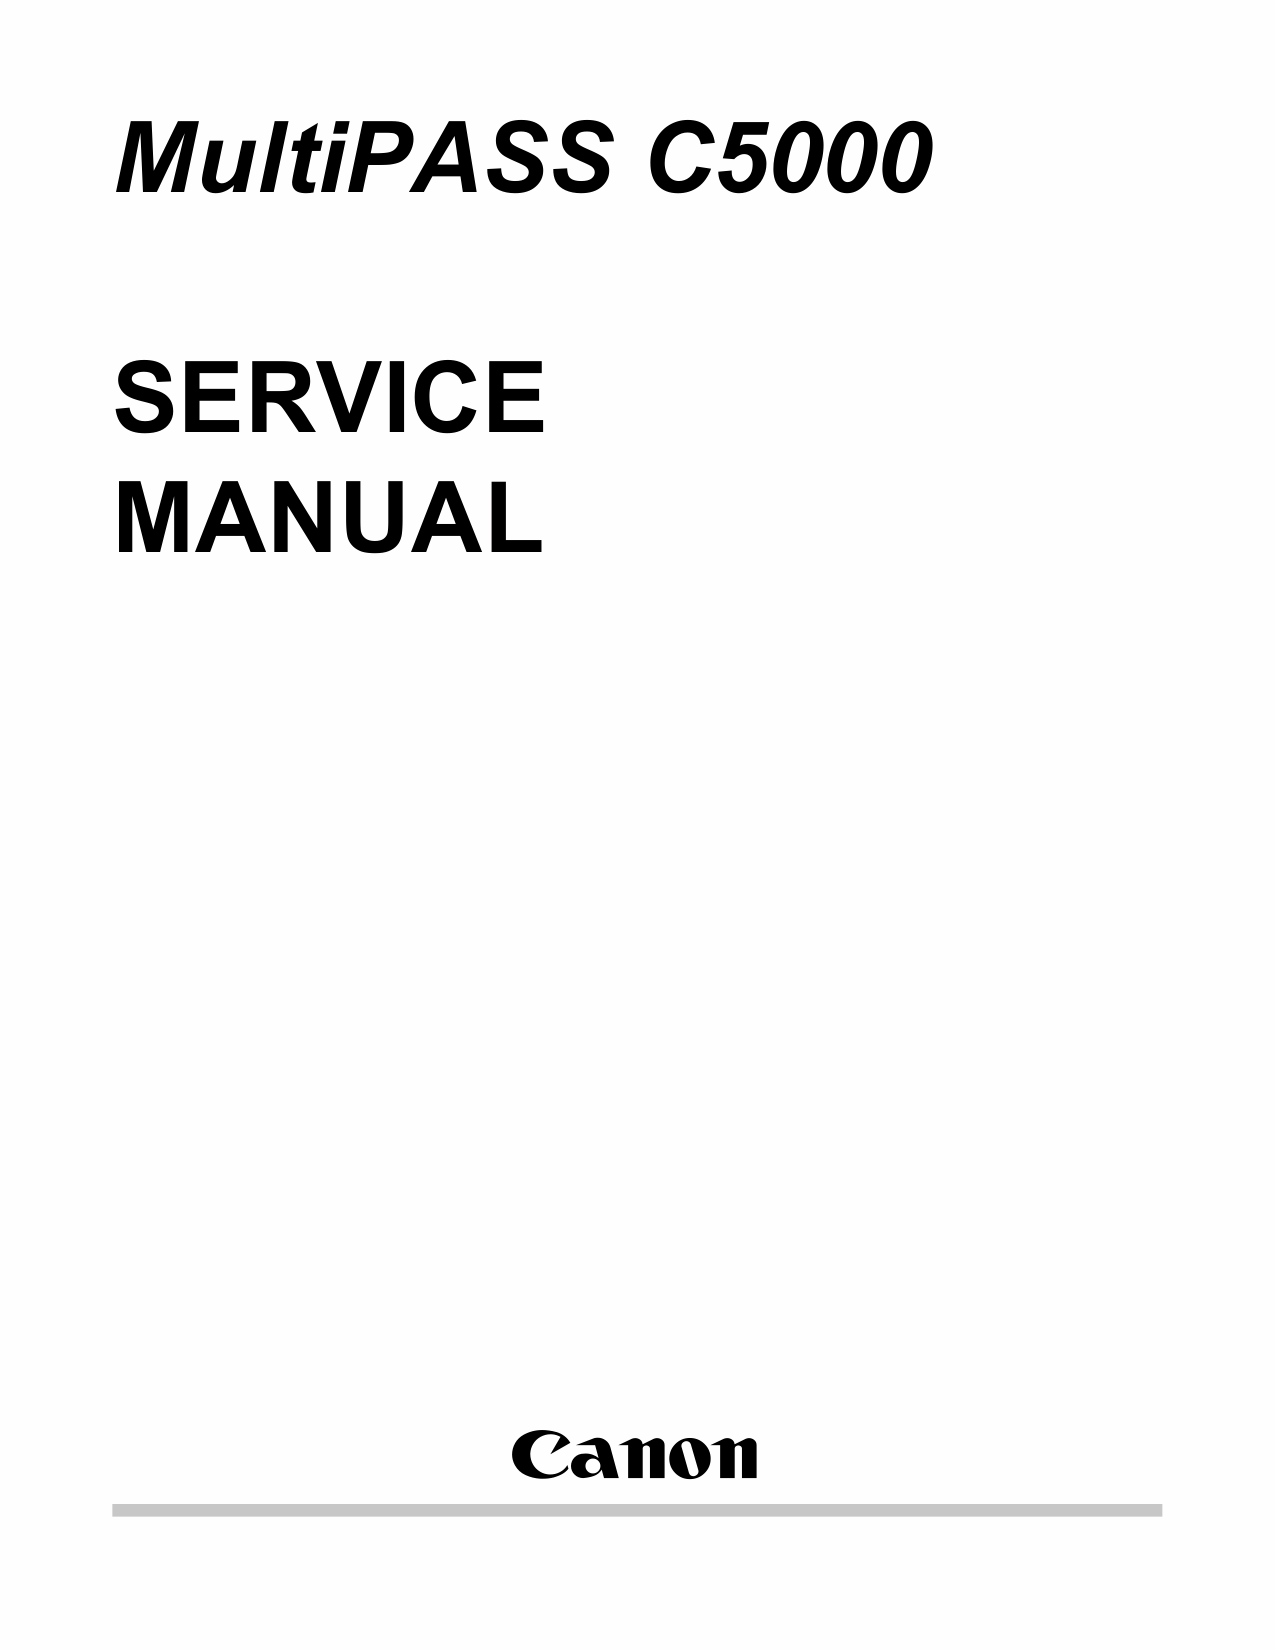 Canon MultiPASS MP-C5000 Service Manual-1